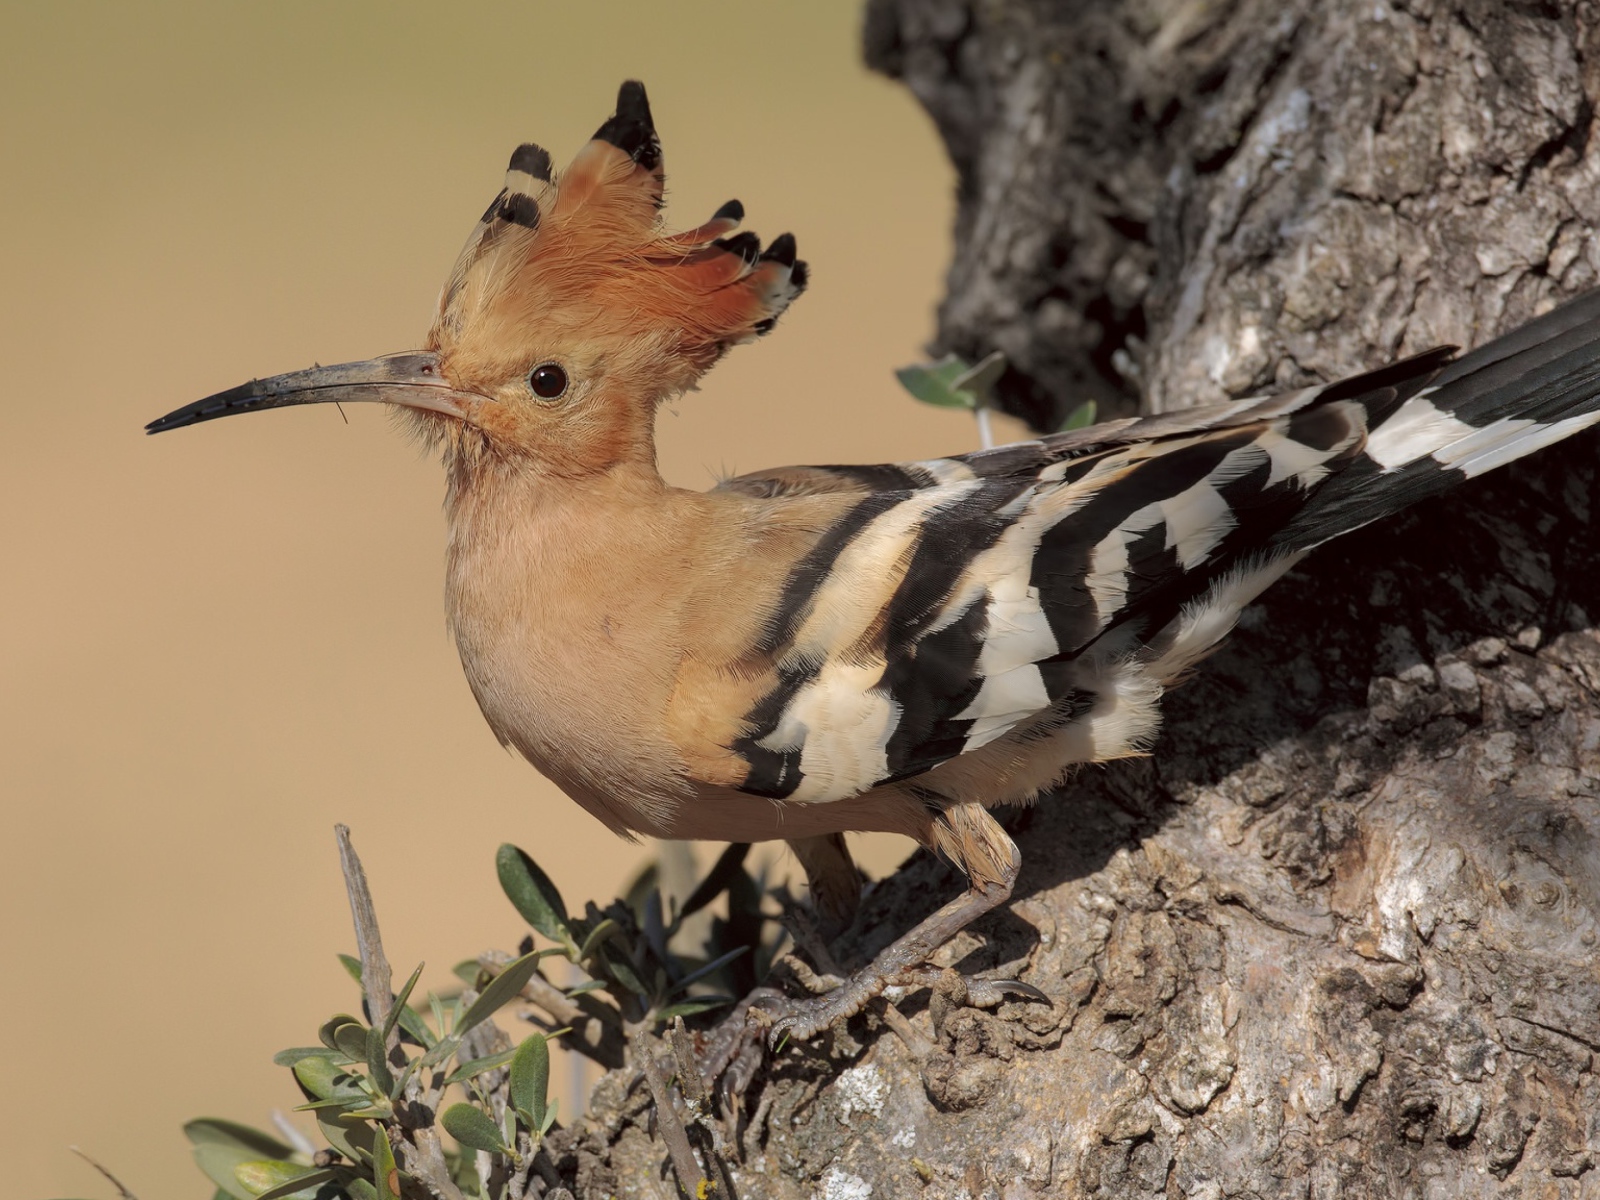 The bird hoopoe with a sharp beak sits on a tree